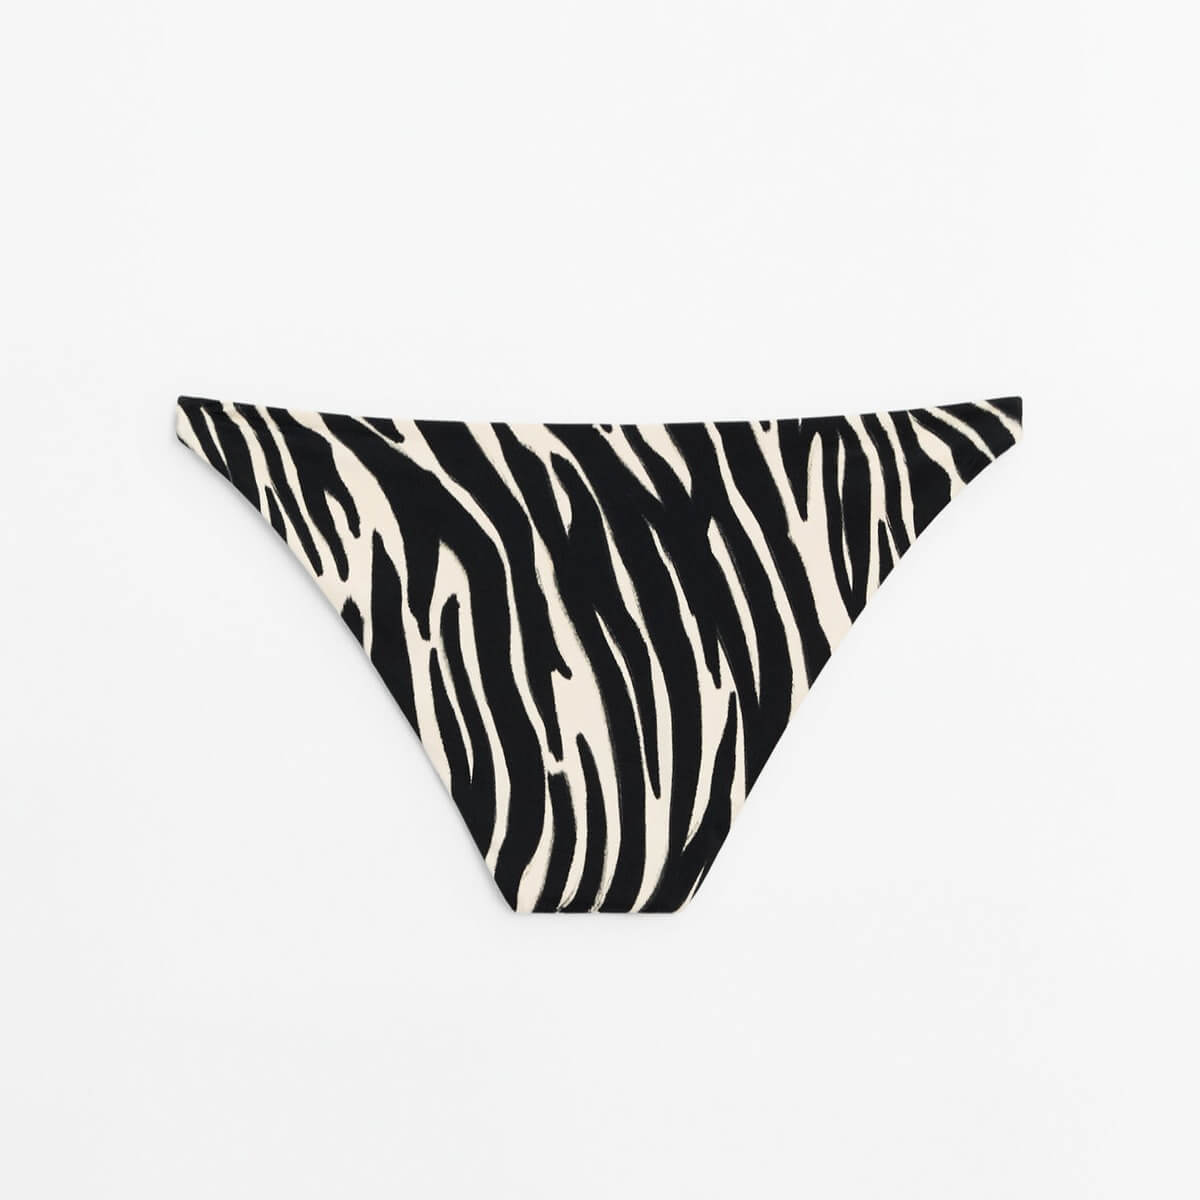 Низ купальника Massimo Dutti Printed Bikini, черный/белый цена и фото